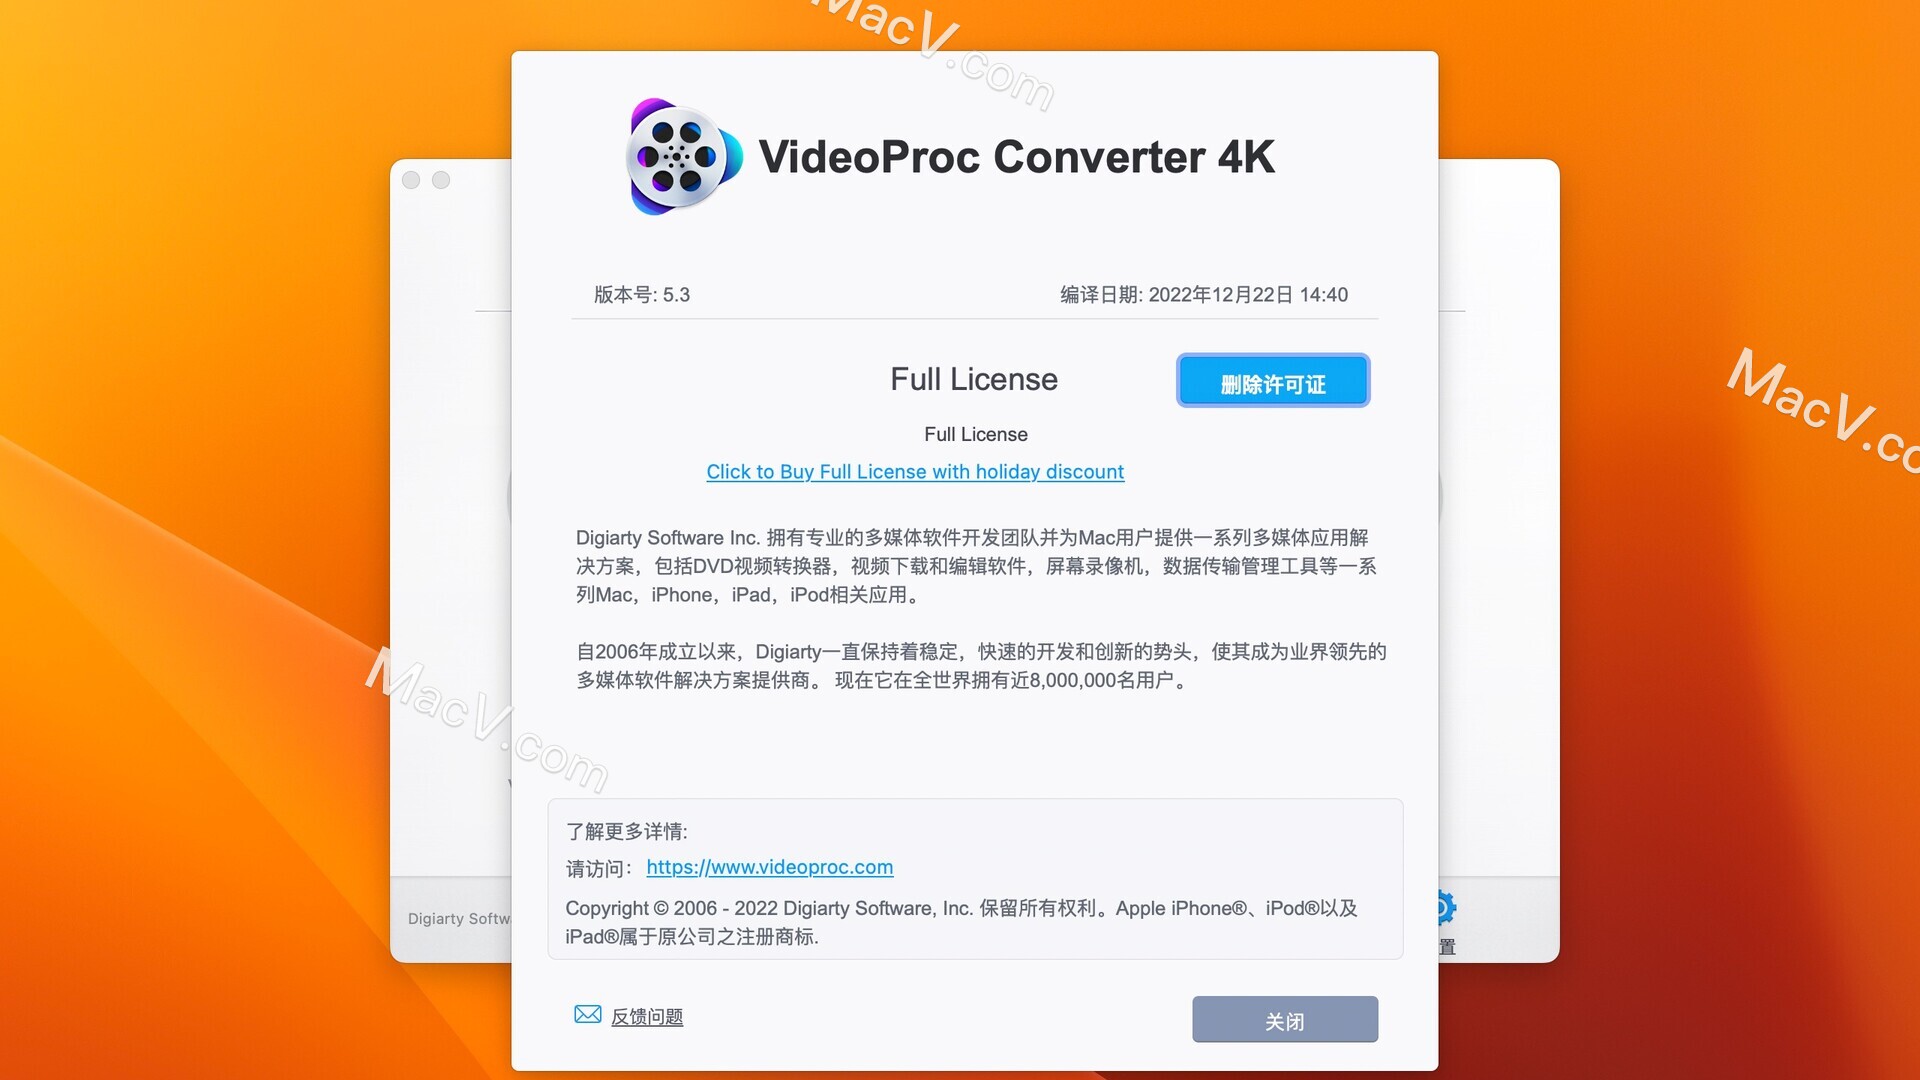 videoproc 3.2 karenpc